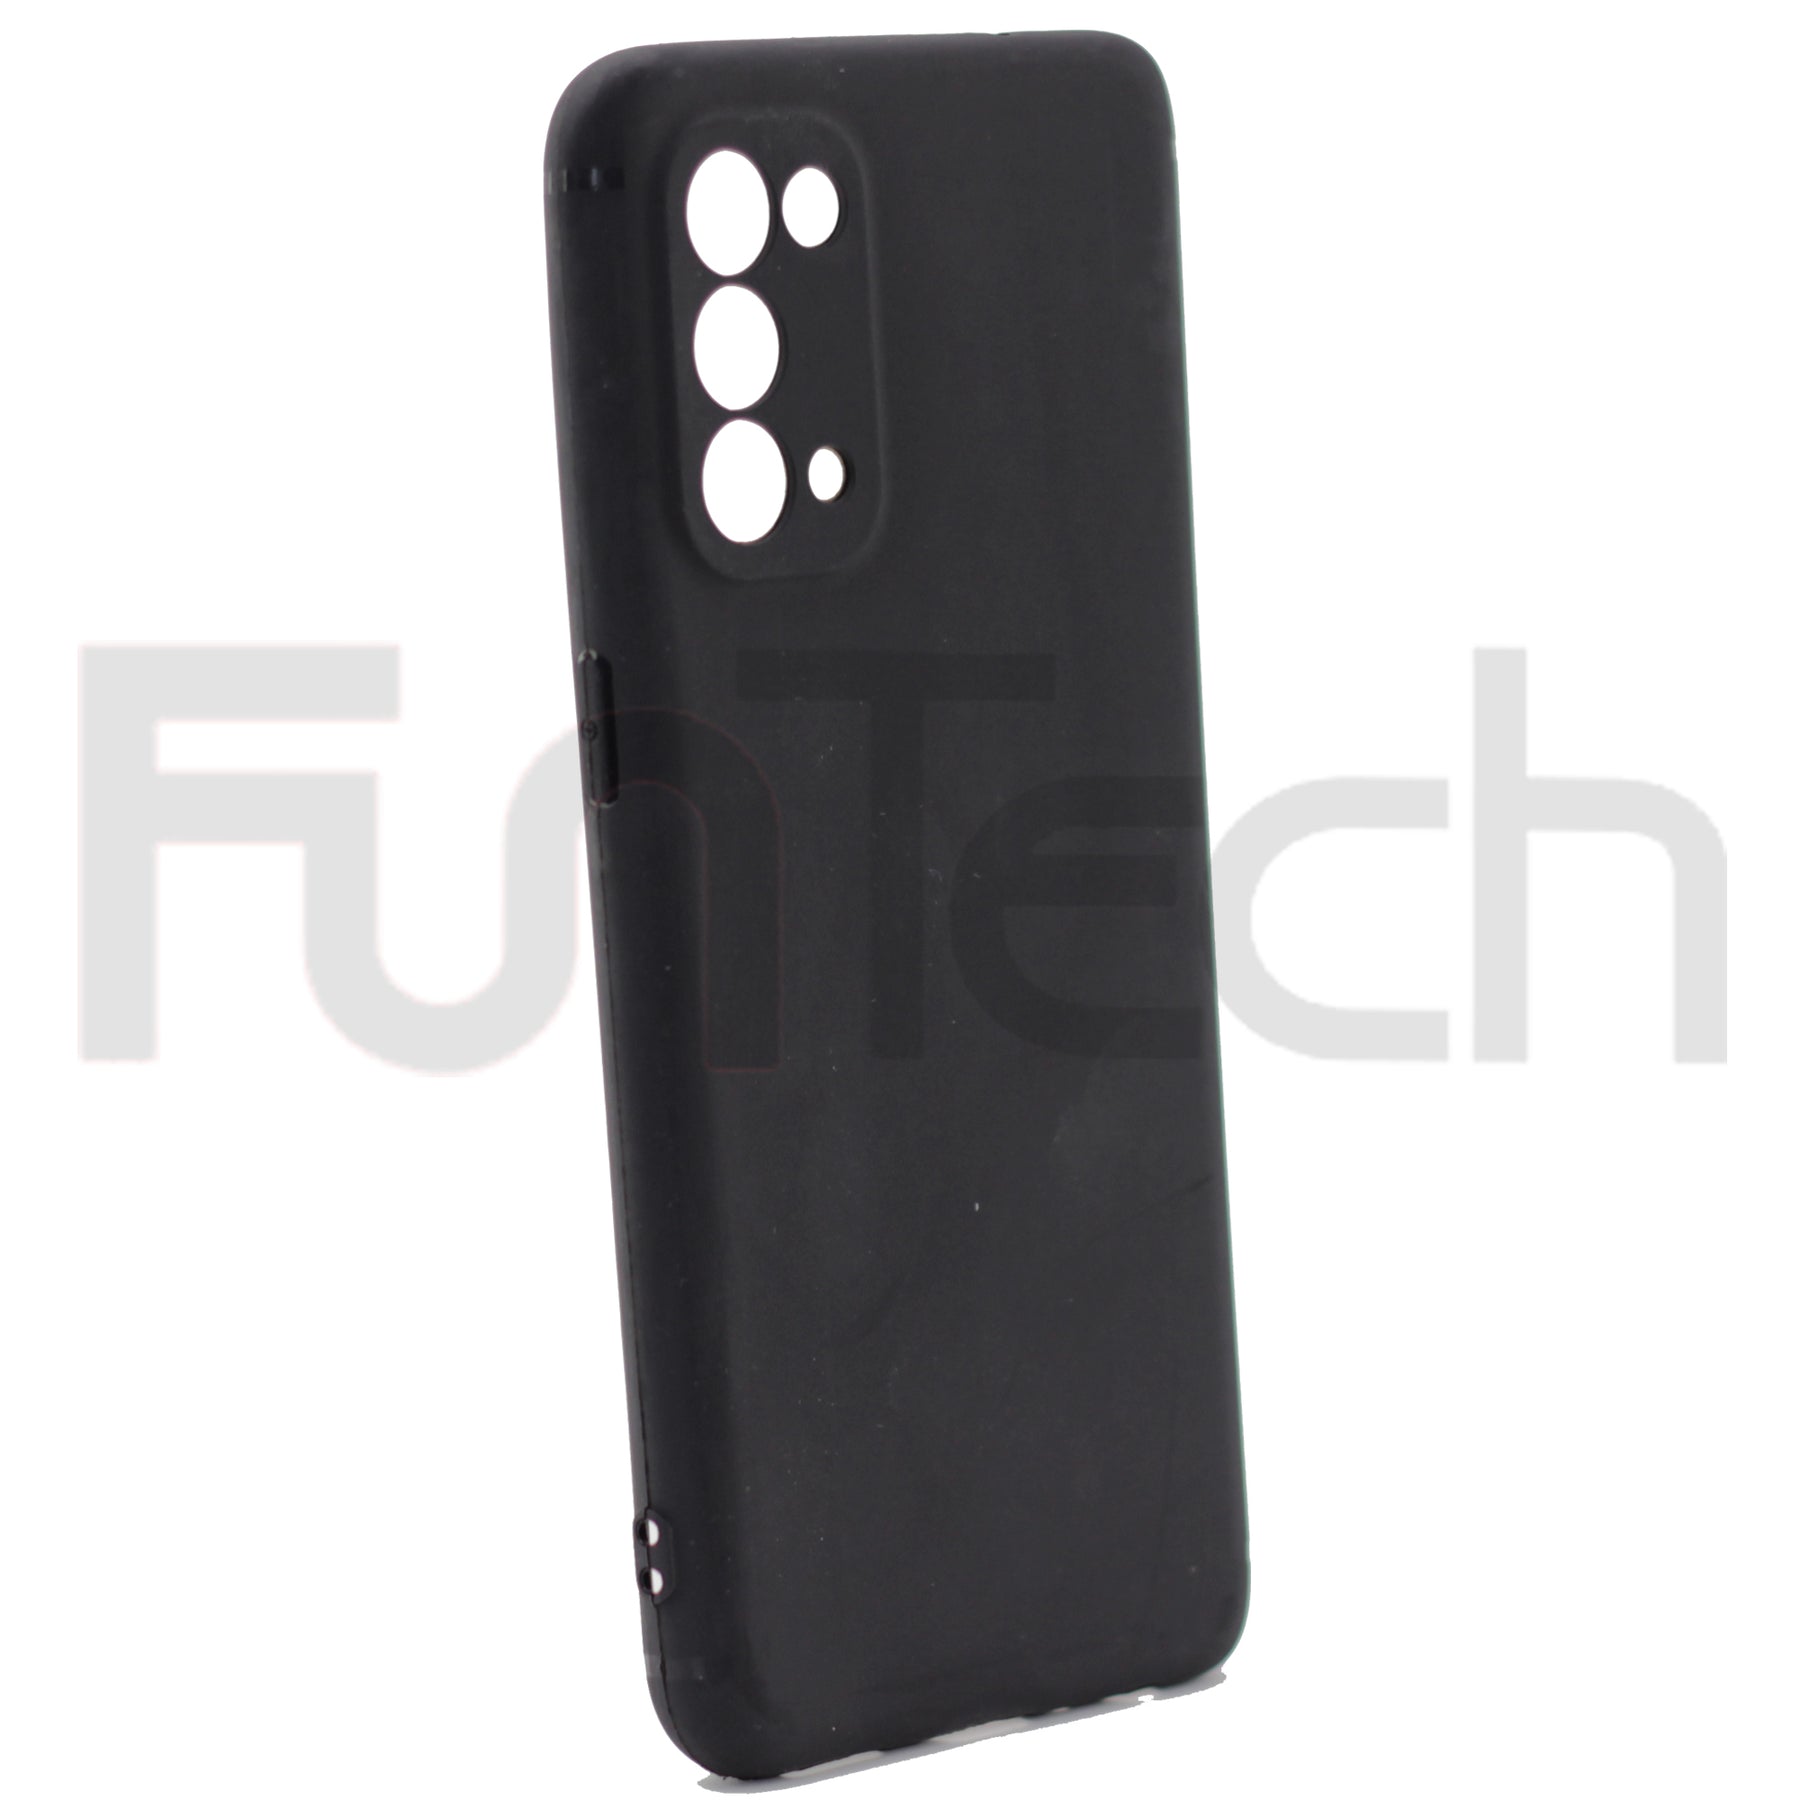 Oppo, FIND X3 Lite 5G, Protective Case, Color Black